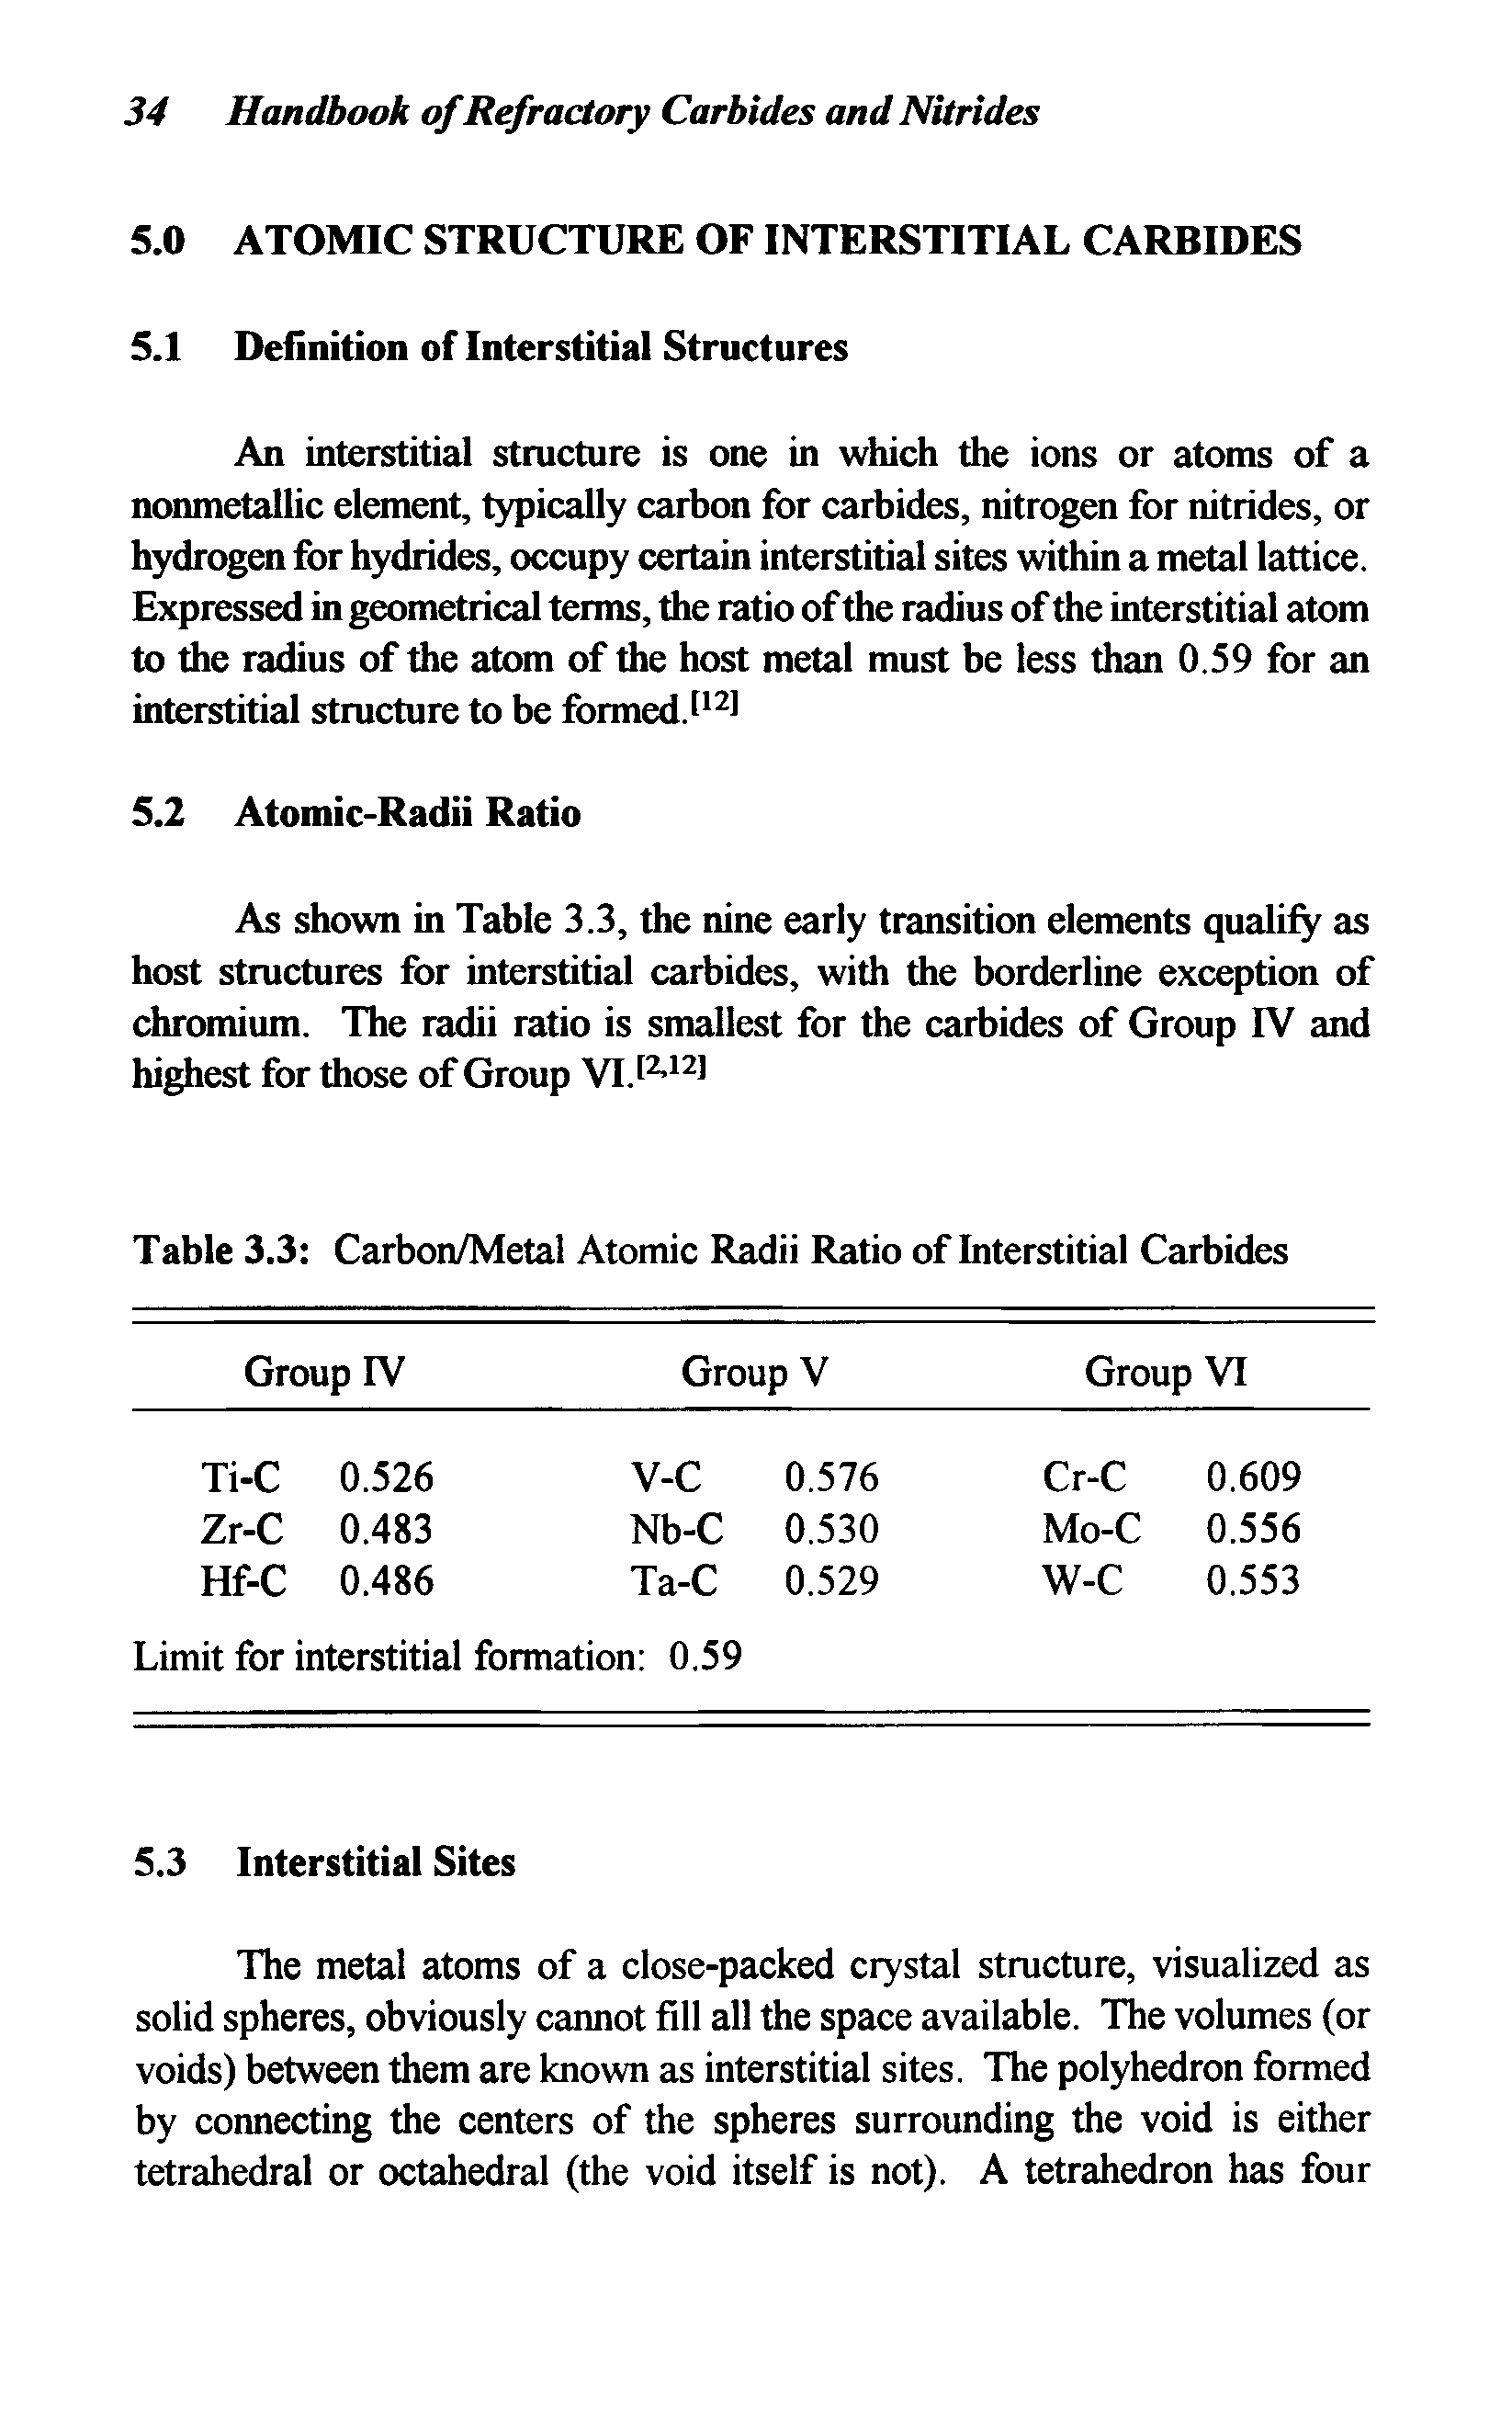 Table 3.3 Carbon/Metal Atomic Radii Ratio of Interstitial Carbides...